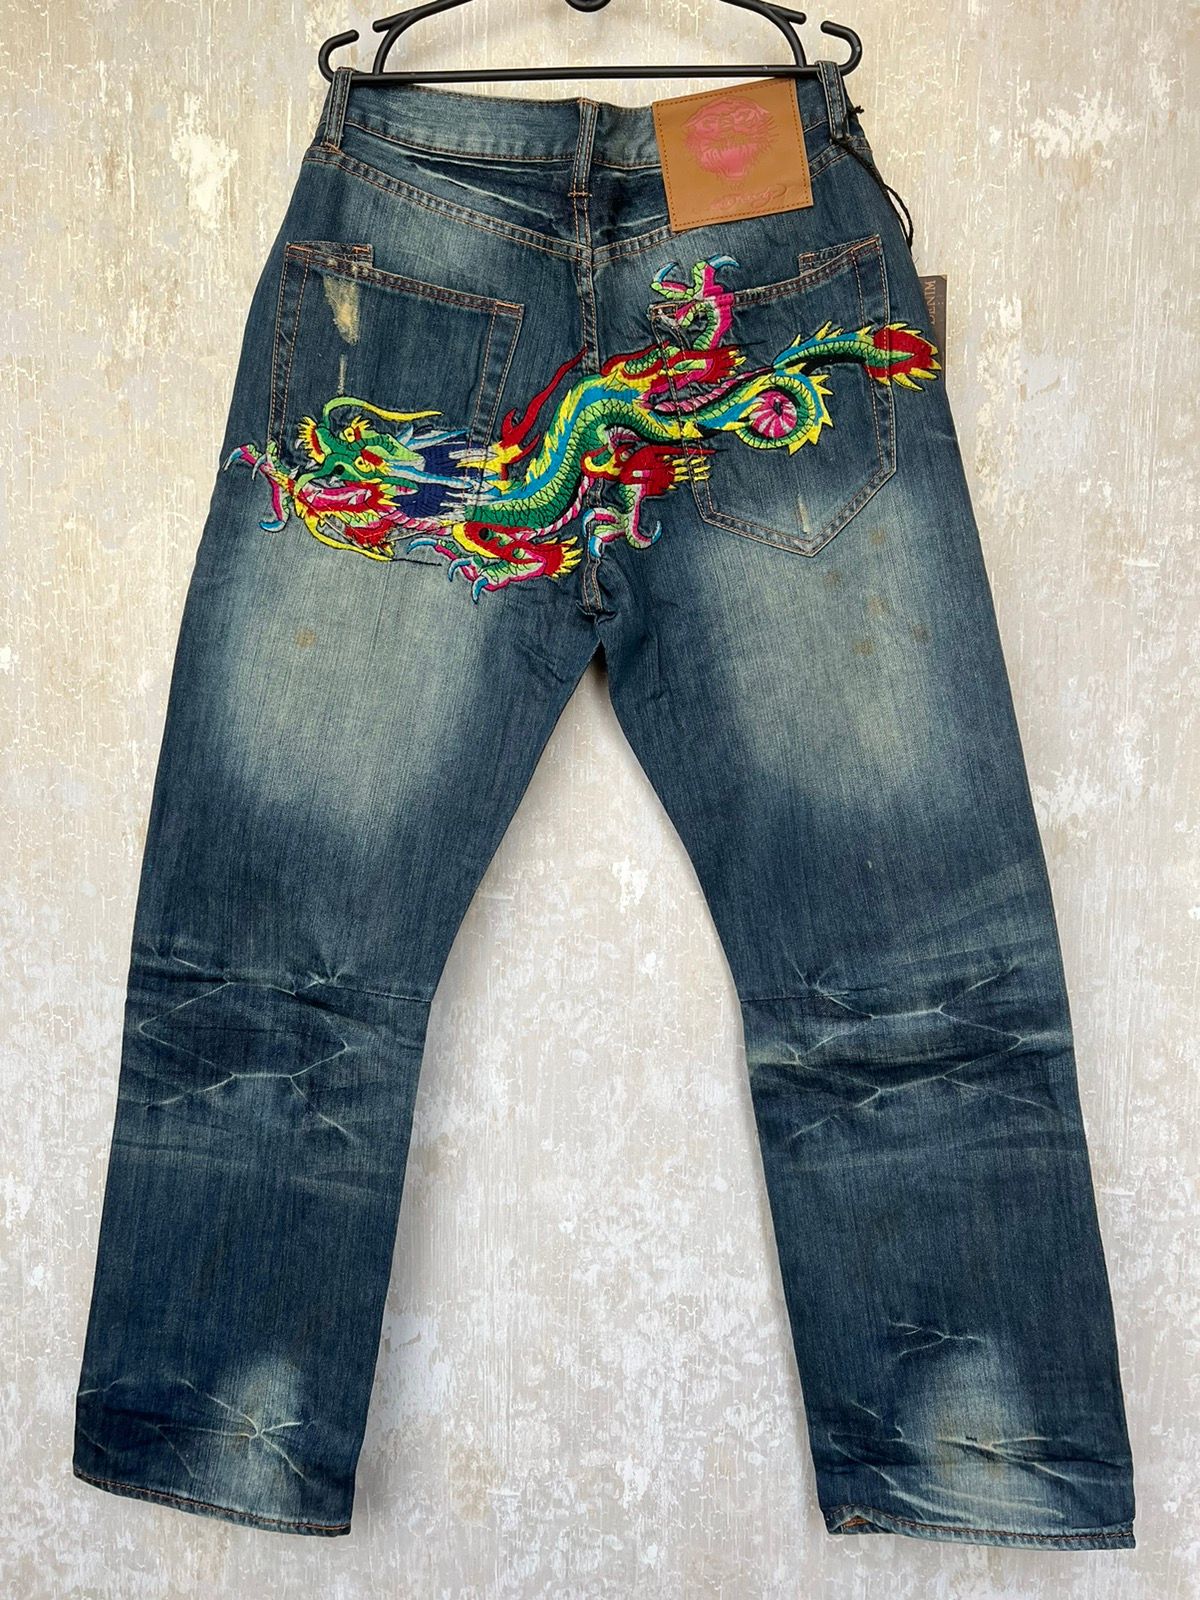 Pre-owned Christian Audigier X Ed Hardy Vintage Ed Hardy Jeans By Christian Audigier Pants In Denim